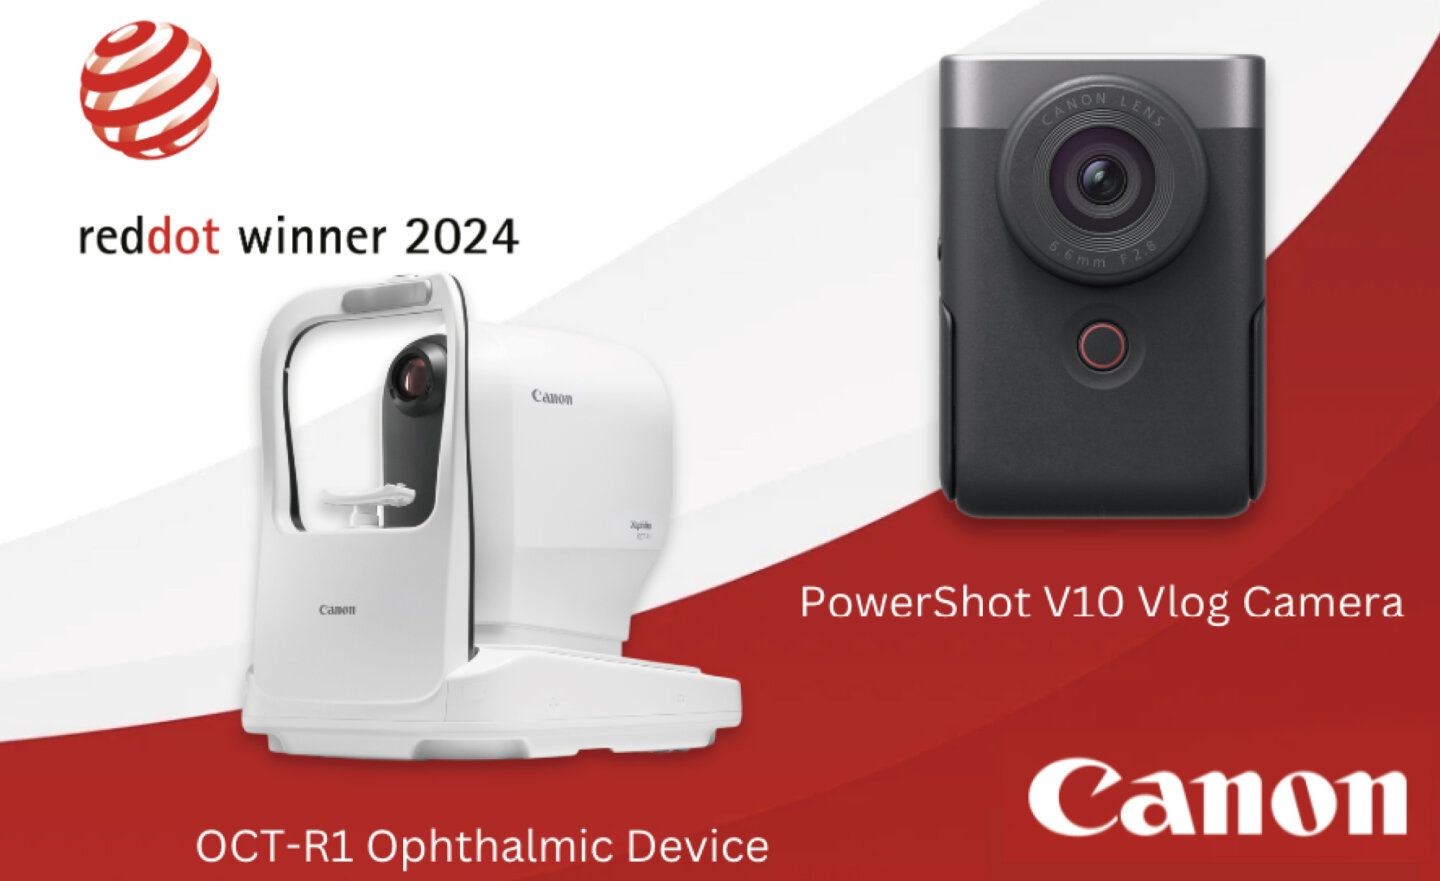 Canon PowerShot V10 影音相機及 OCT-R1 眼科光學斷層掃描器獲得多項國際設計大獎